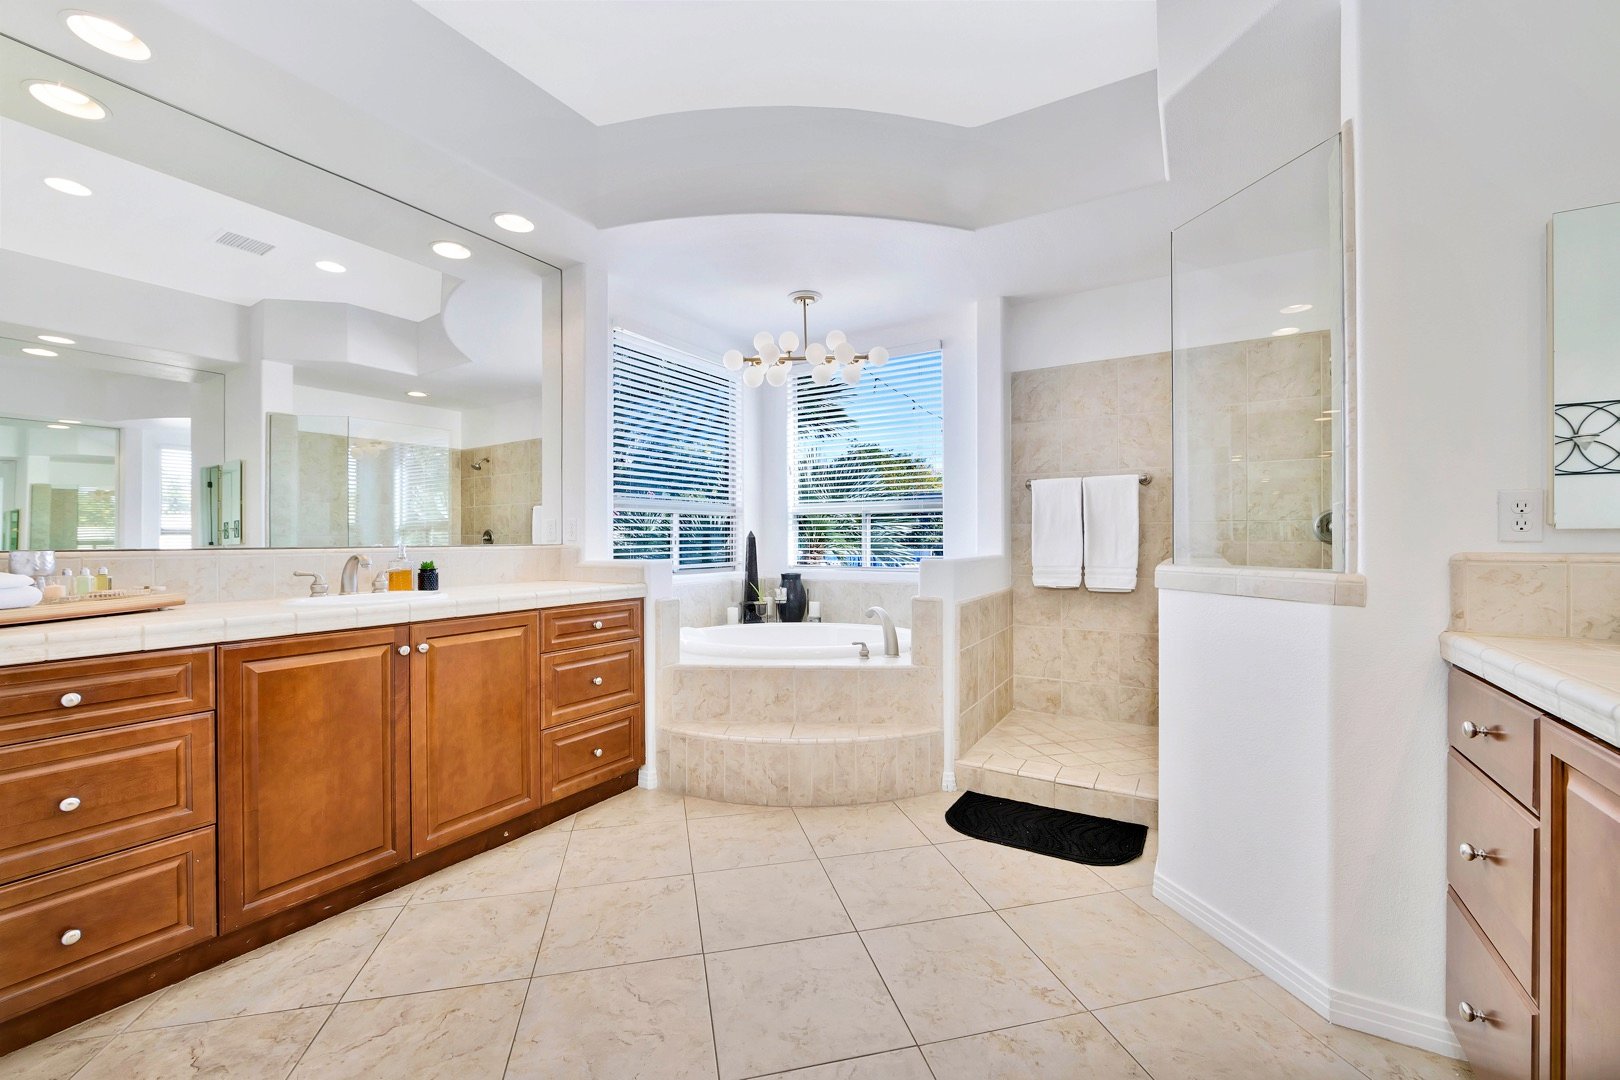 The master bathroom has his & hers vanity sinks, step in shower, and huge soaking tub.